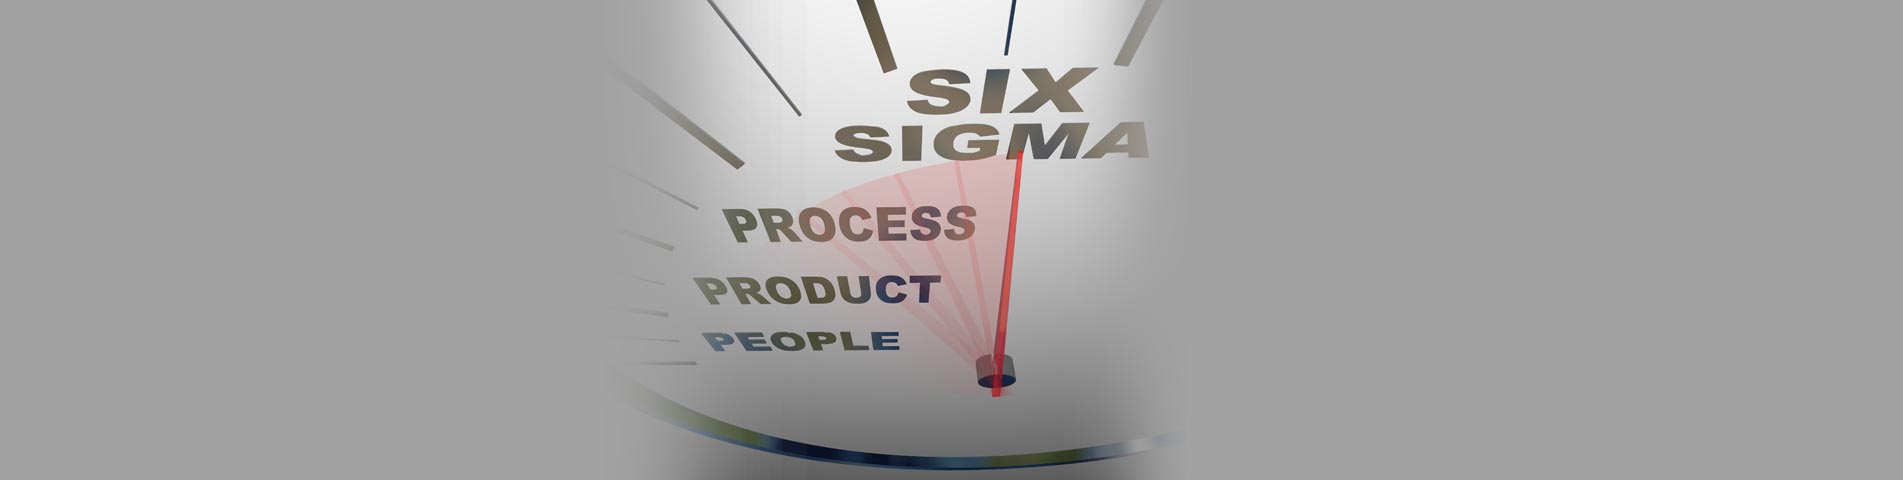 Six Sigma,Process,Product,People